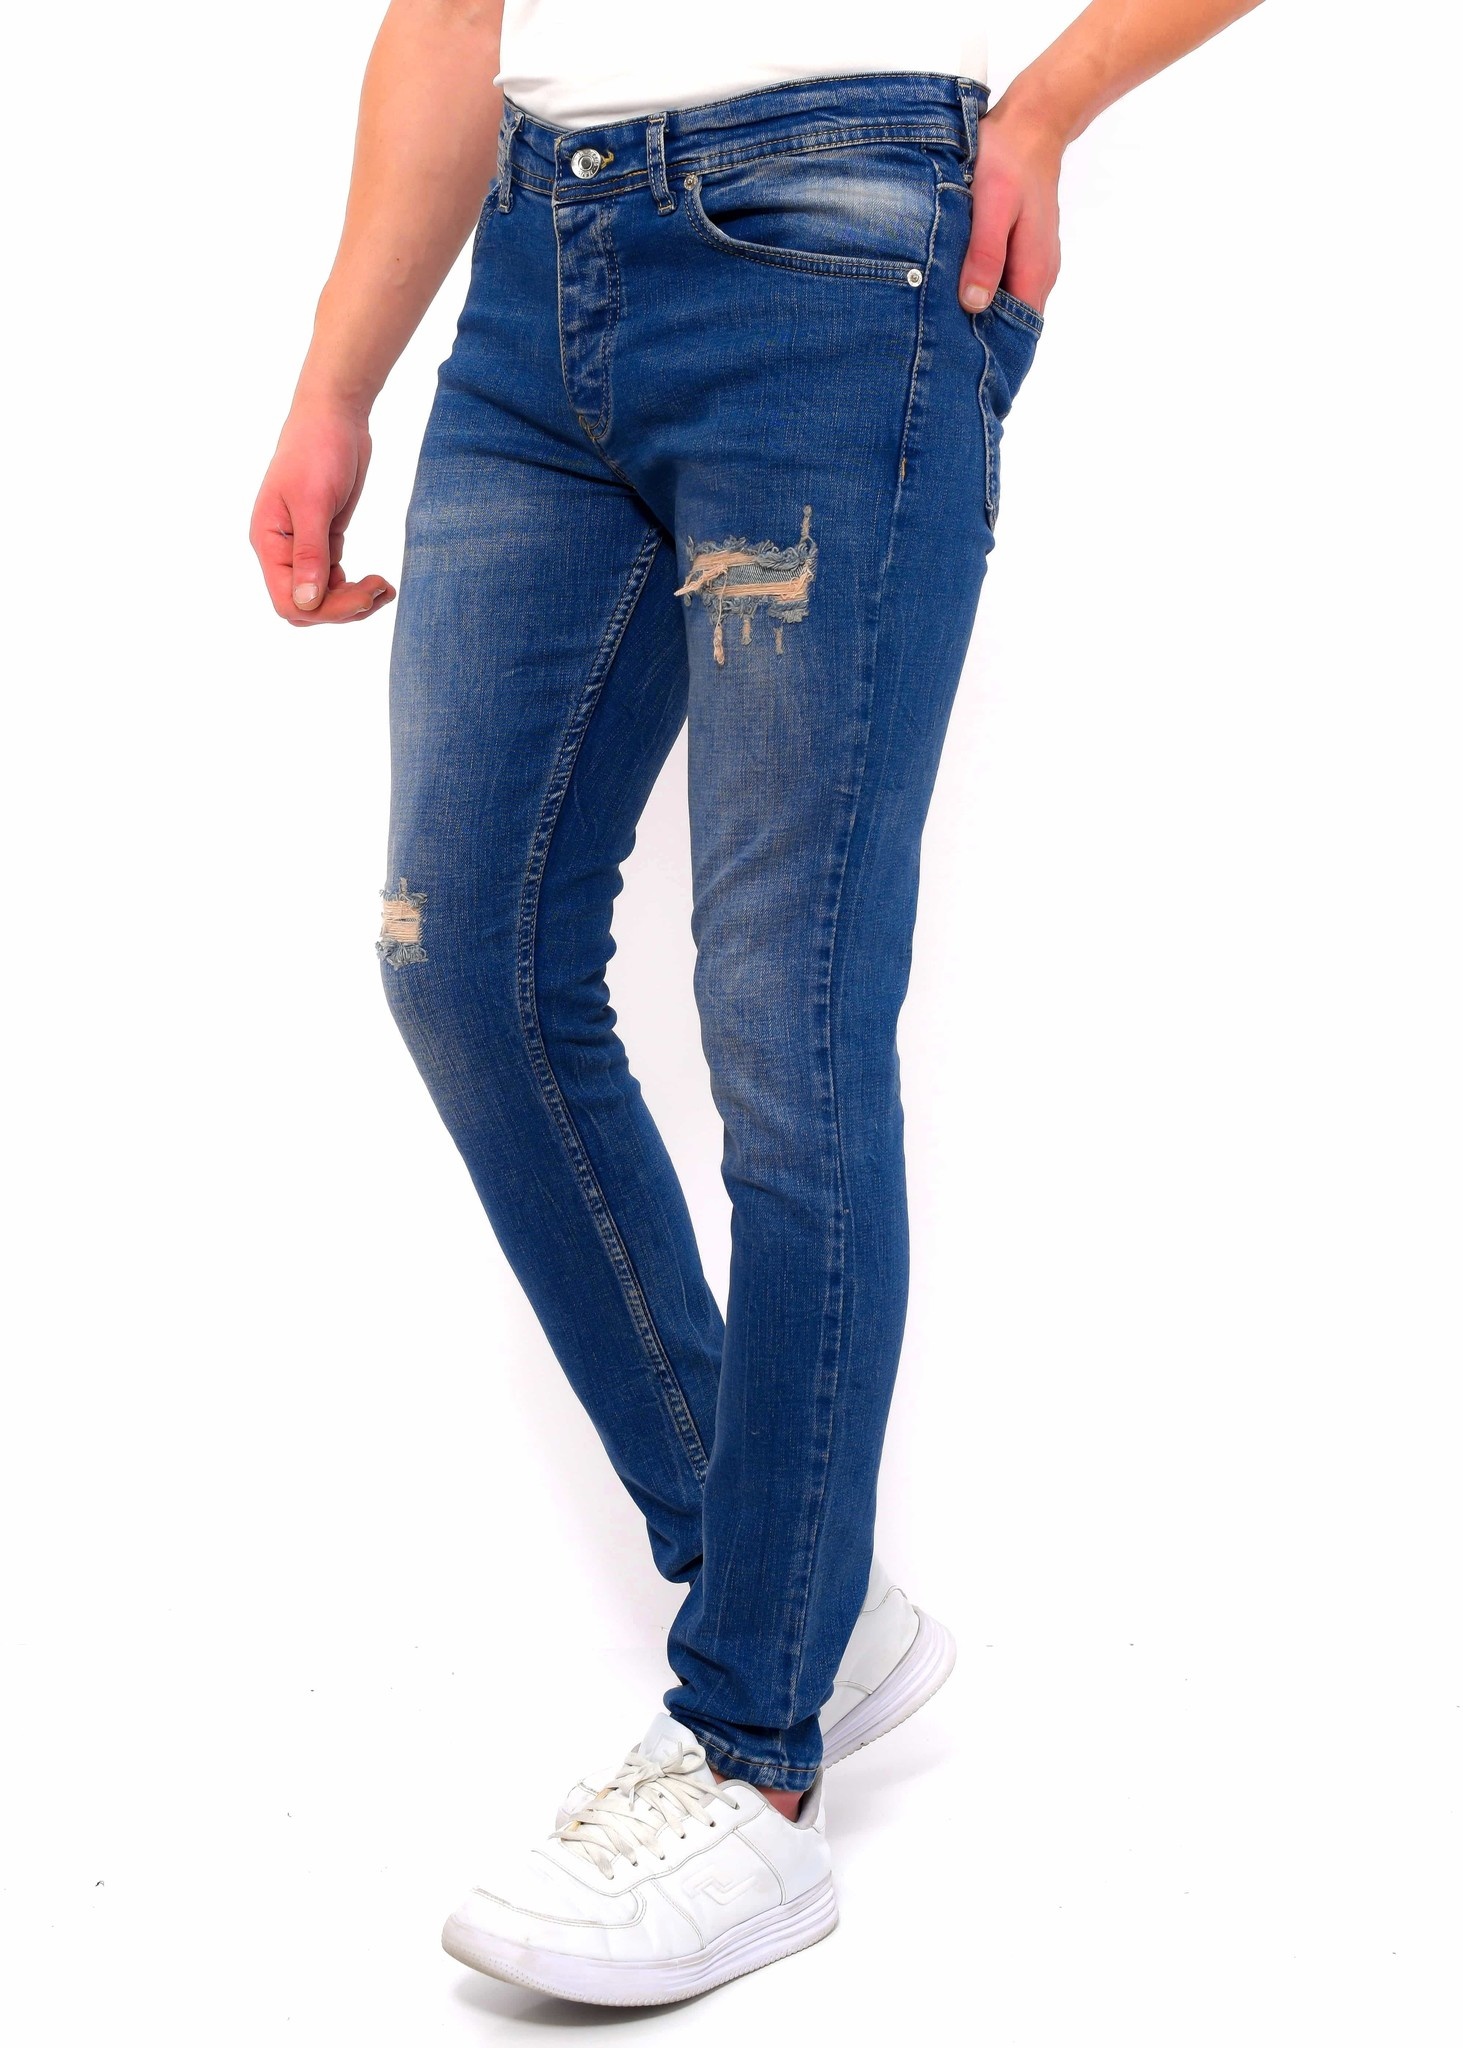 Men's Slim Fit Black Ripped Jeans - BG877